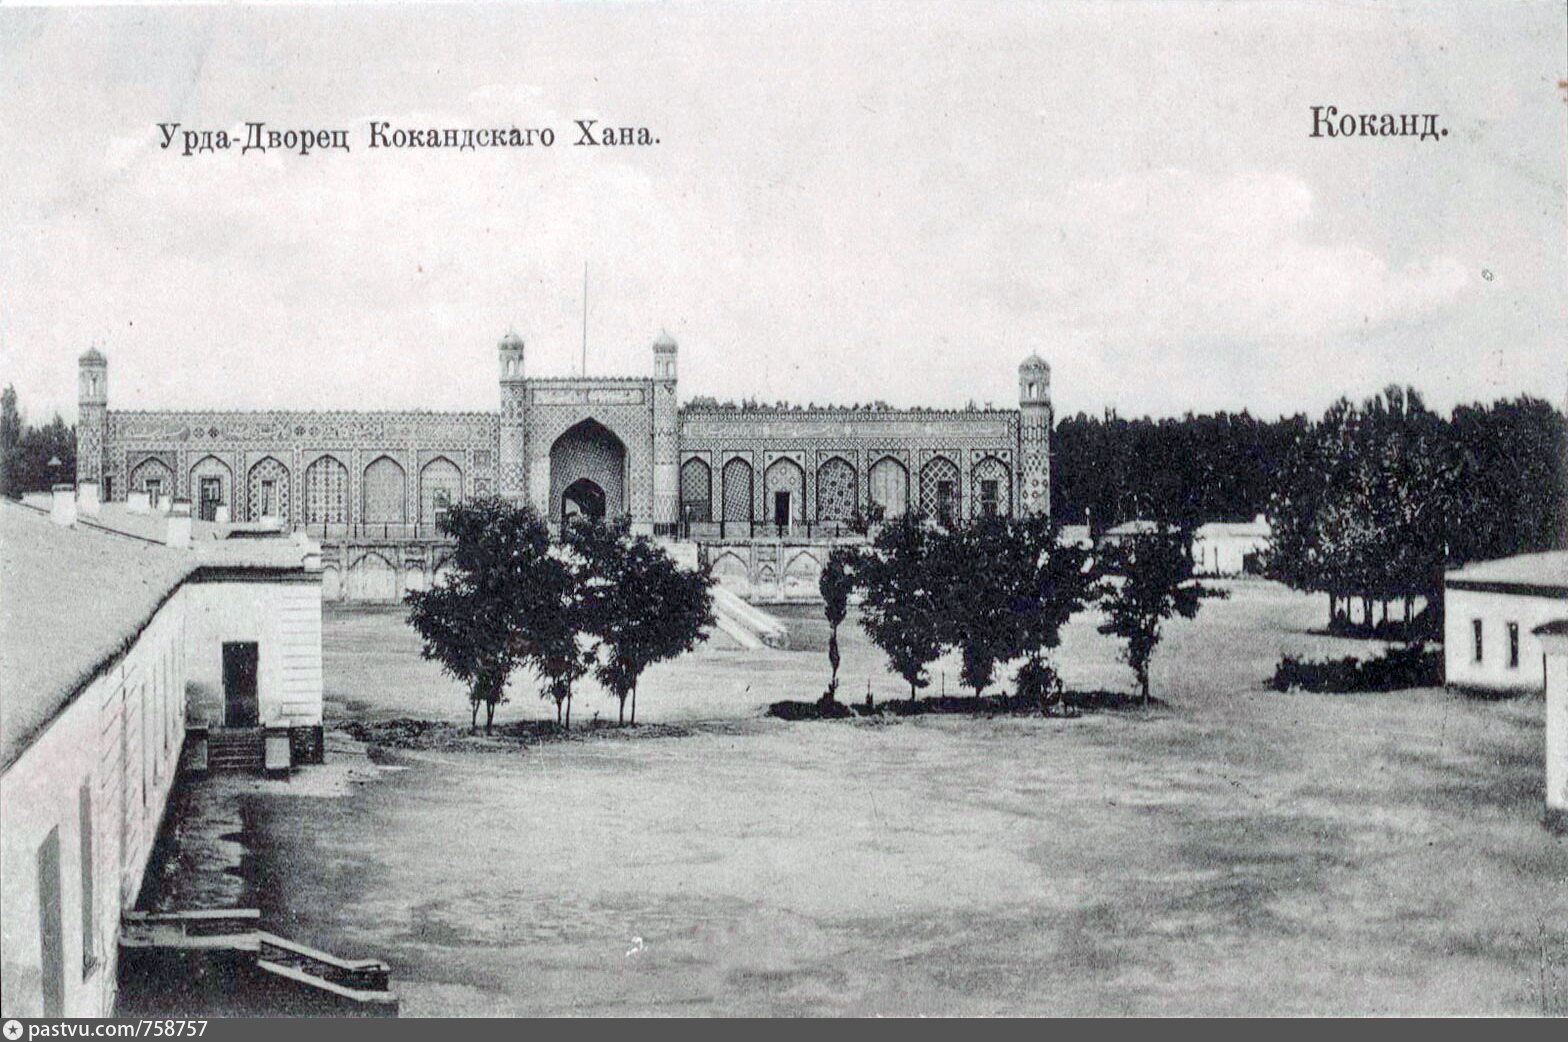 Кокандские ханы. Дворец Худояр-хана Коканд. Кокандское ханство дворец Худояр. Худояр Хан дворец 1871. Кокандский Хан Худояр Хан.